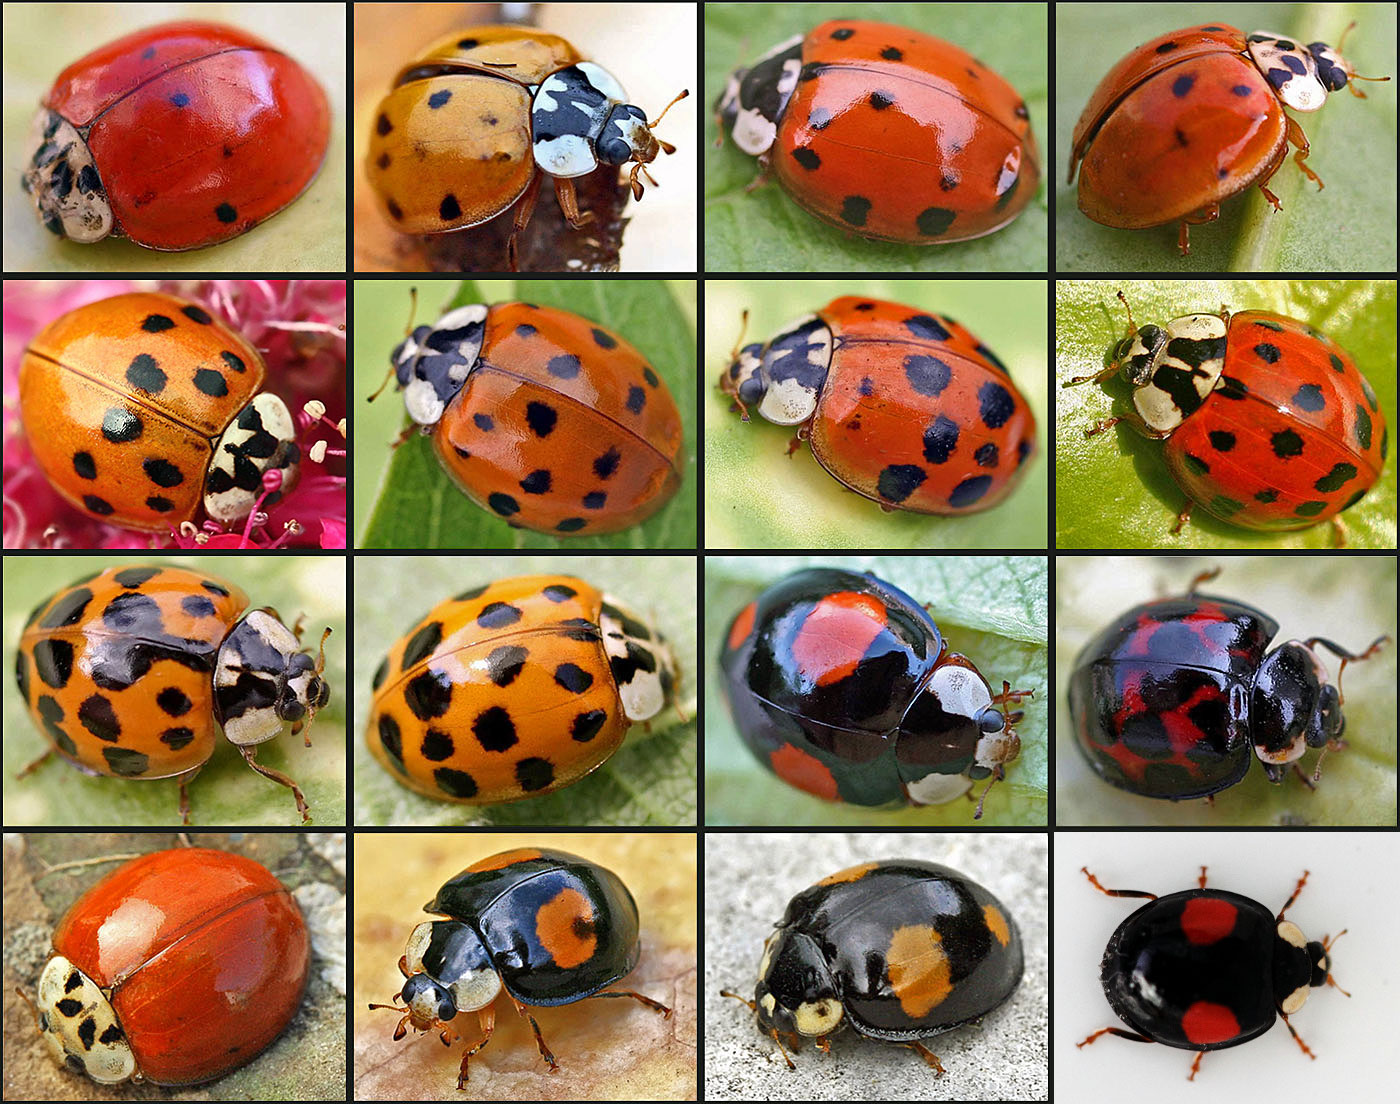 Why do ladybugs have patterns?